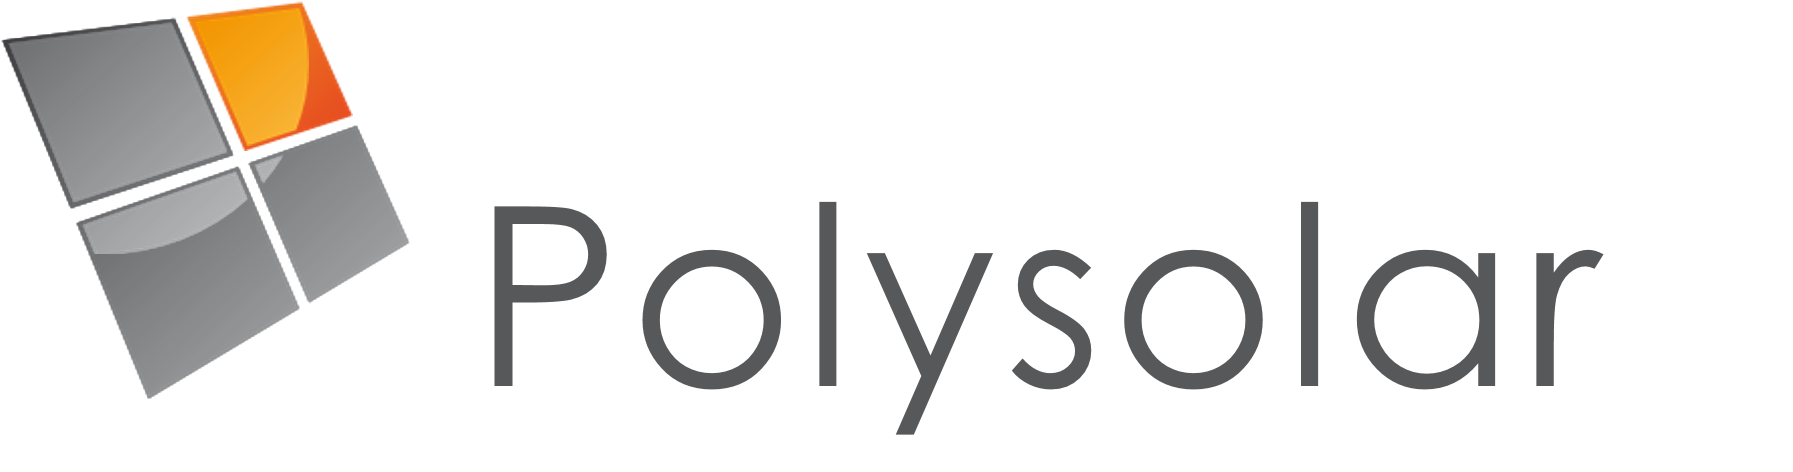 Polysolar Technology Home